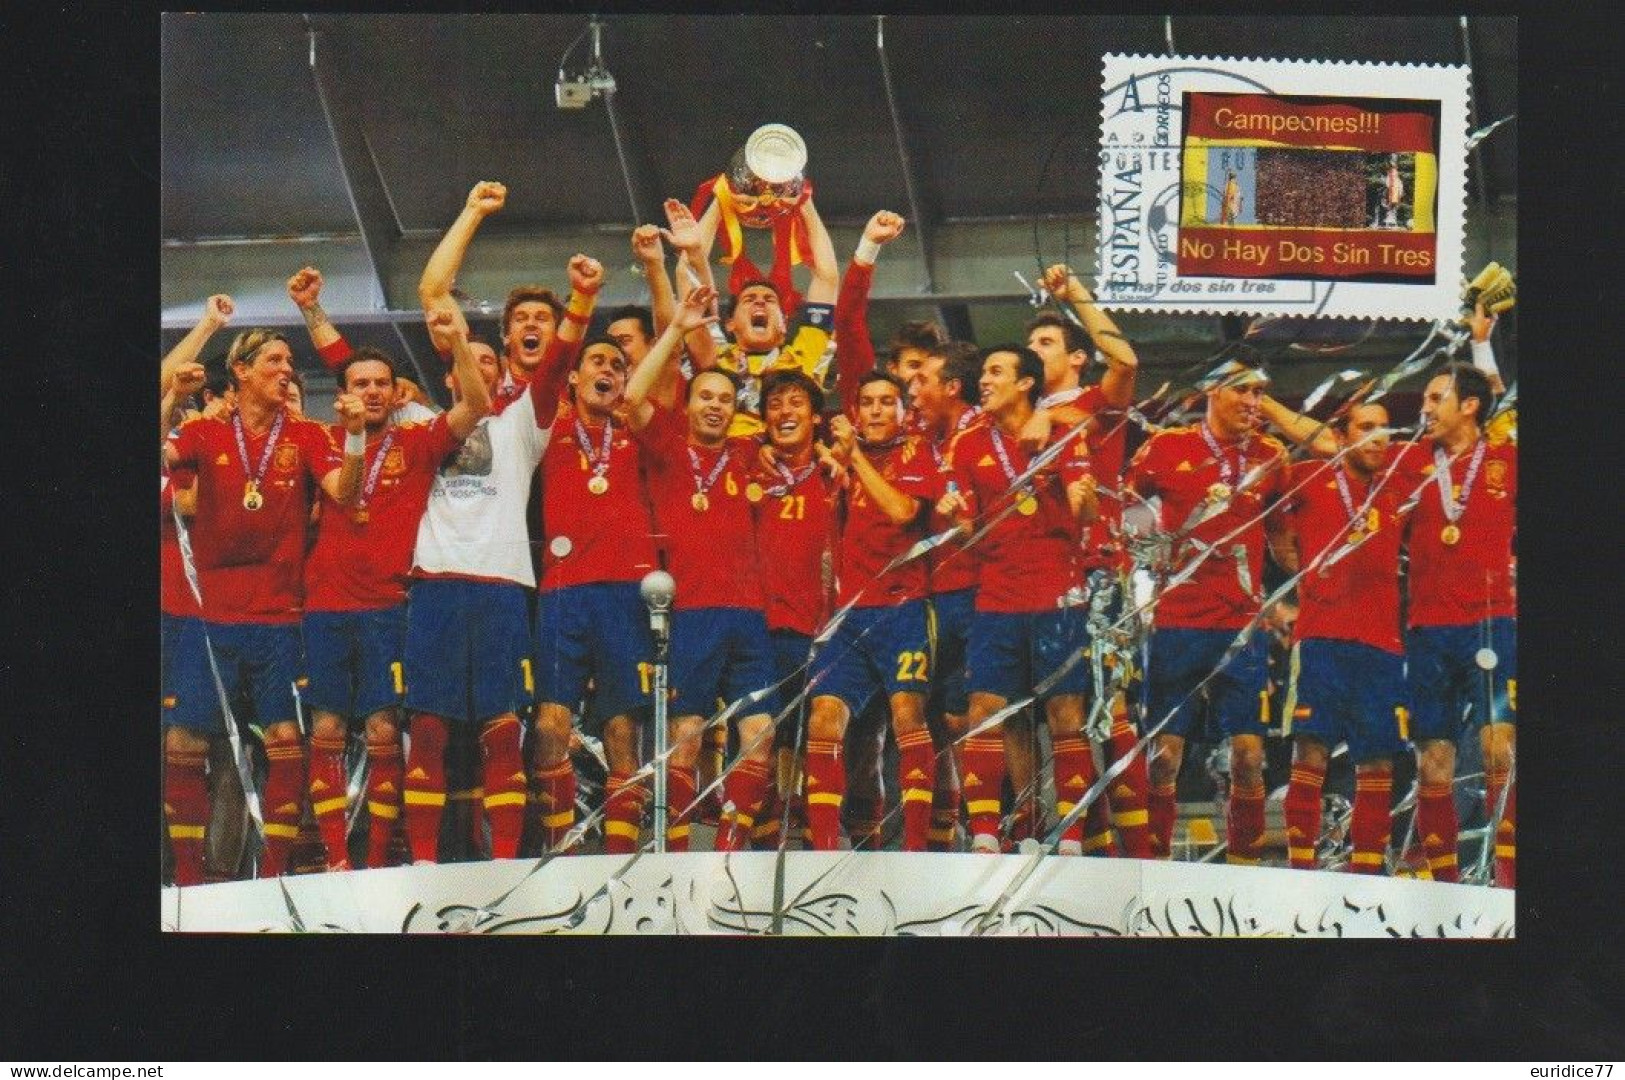 Spain 2012 - Spain The Champions Uefa Euro 2012 No Hay Dos Sin Tres Carte Maximum - UEFA European Championship